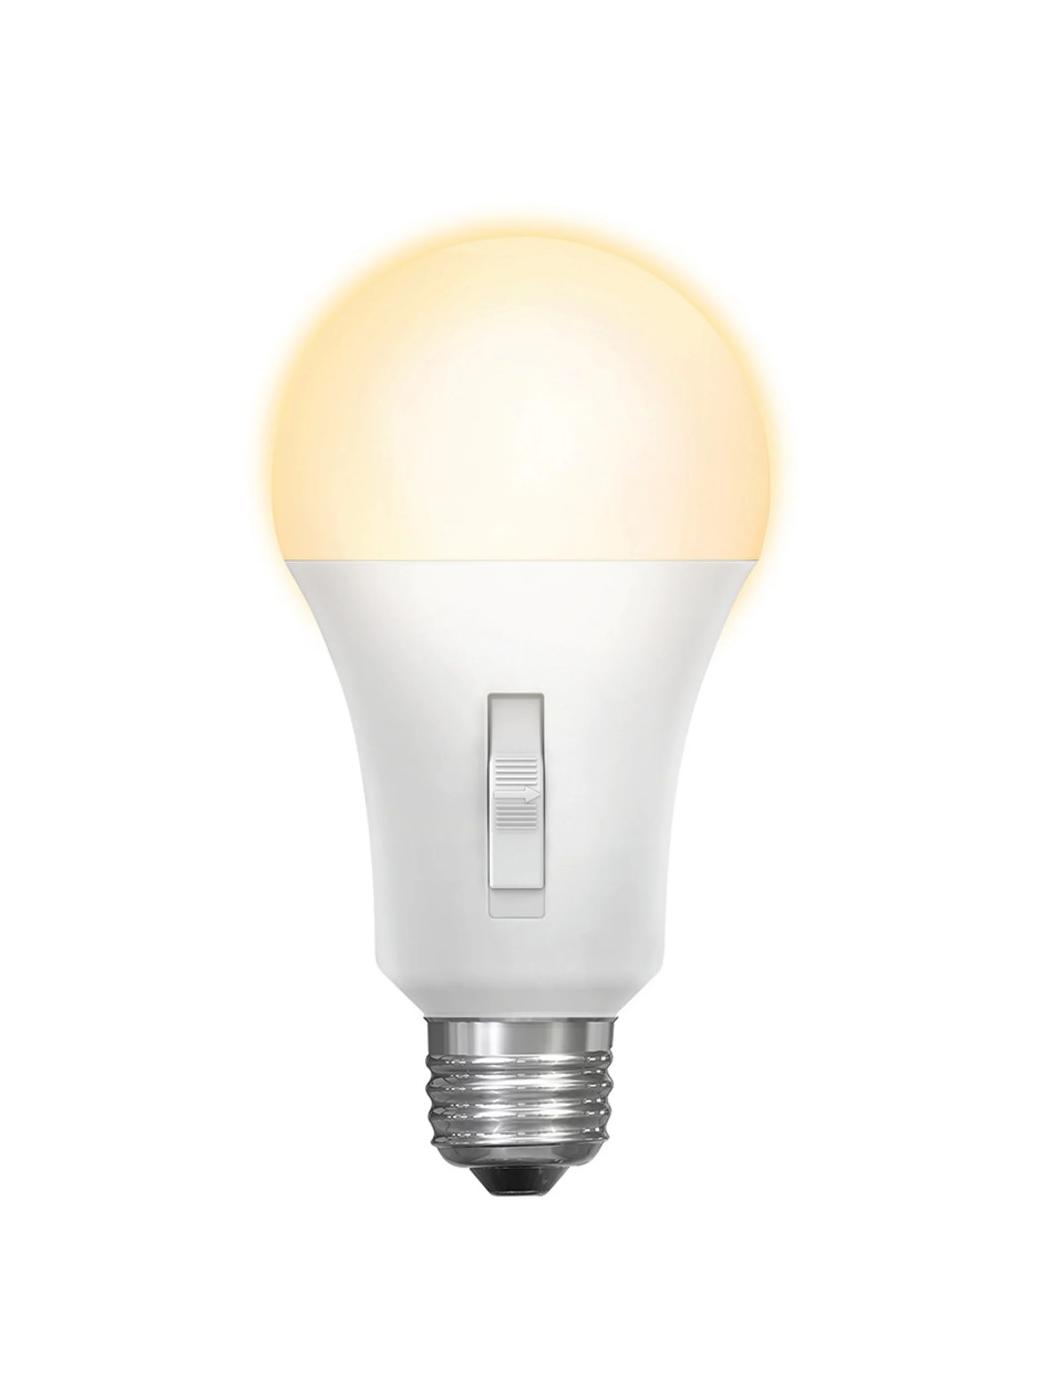 Feit Electric A23 33-Watt Super Bright LED Light Bulbs; image 2 of 2